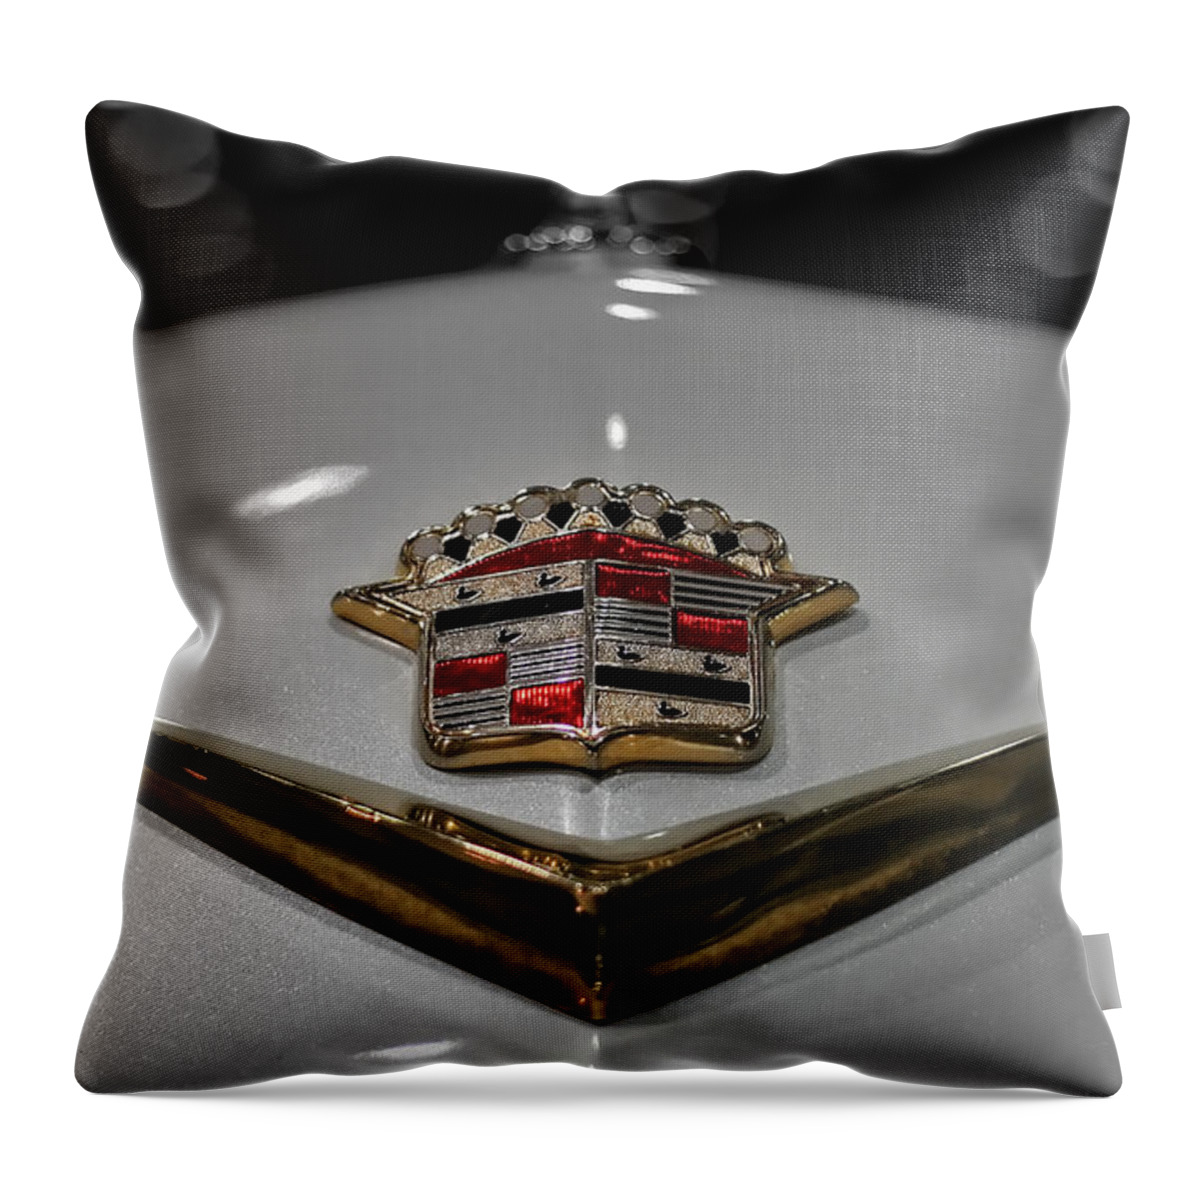 1949 Throw Pillow featuring the photograph 1949 Cadillac Hood Ornament by Gordon Dean II